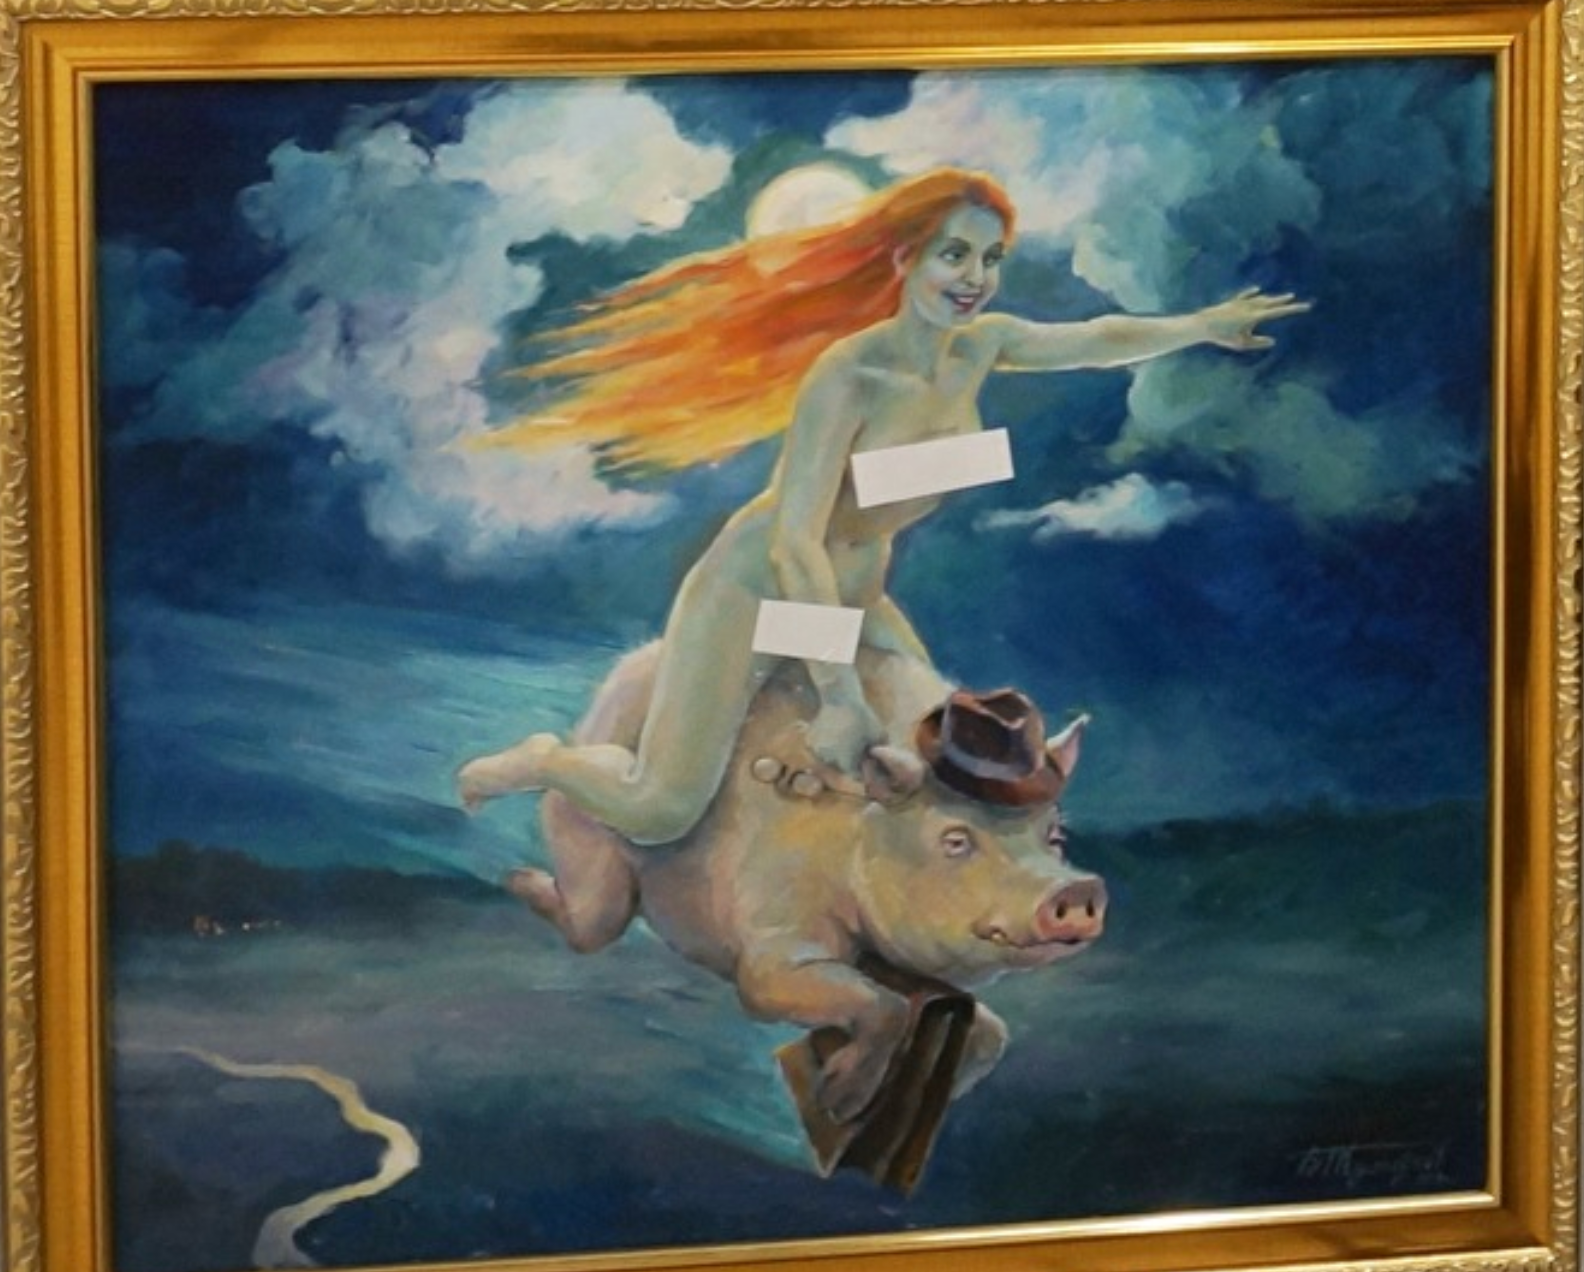 Голая Венера на картине не понравилась цензорам из Екатеринбурга